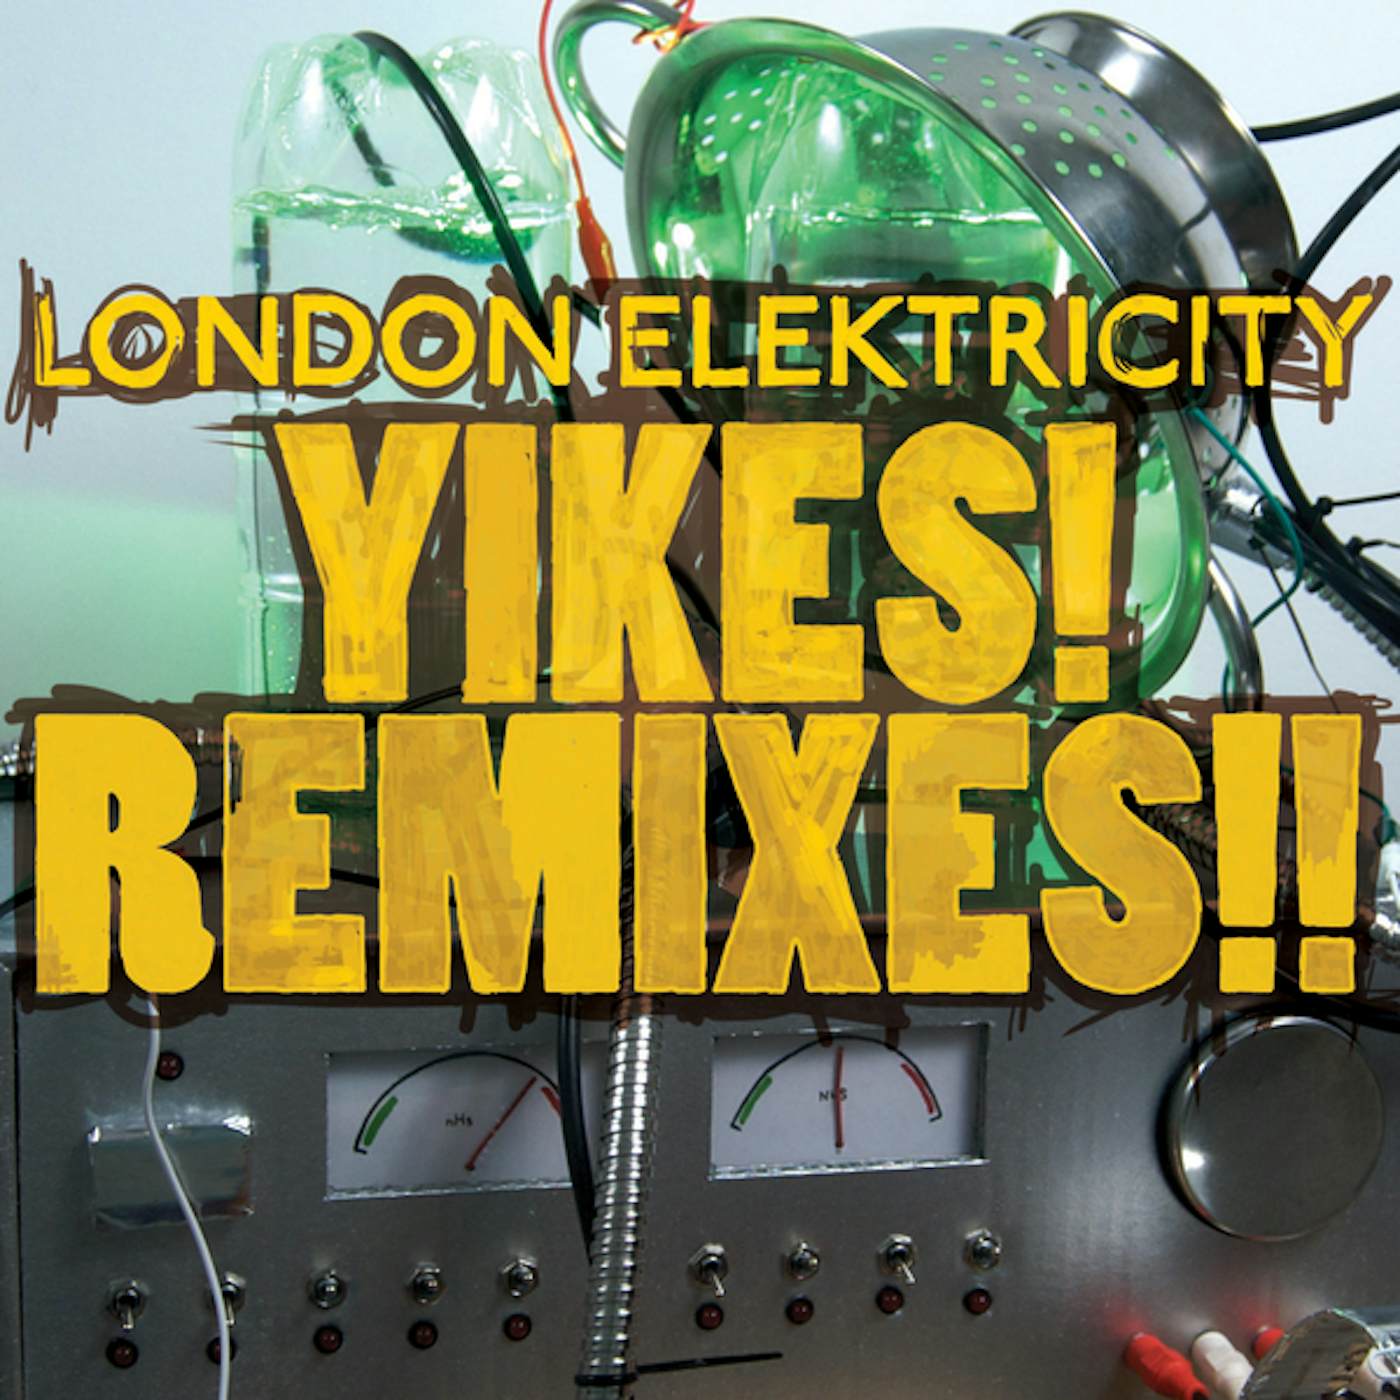 London Elektricity Yikes! Remixes!!